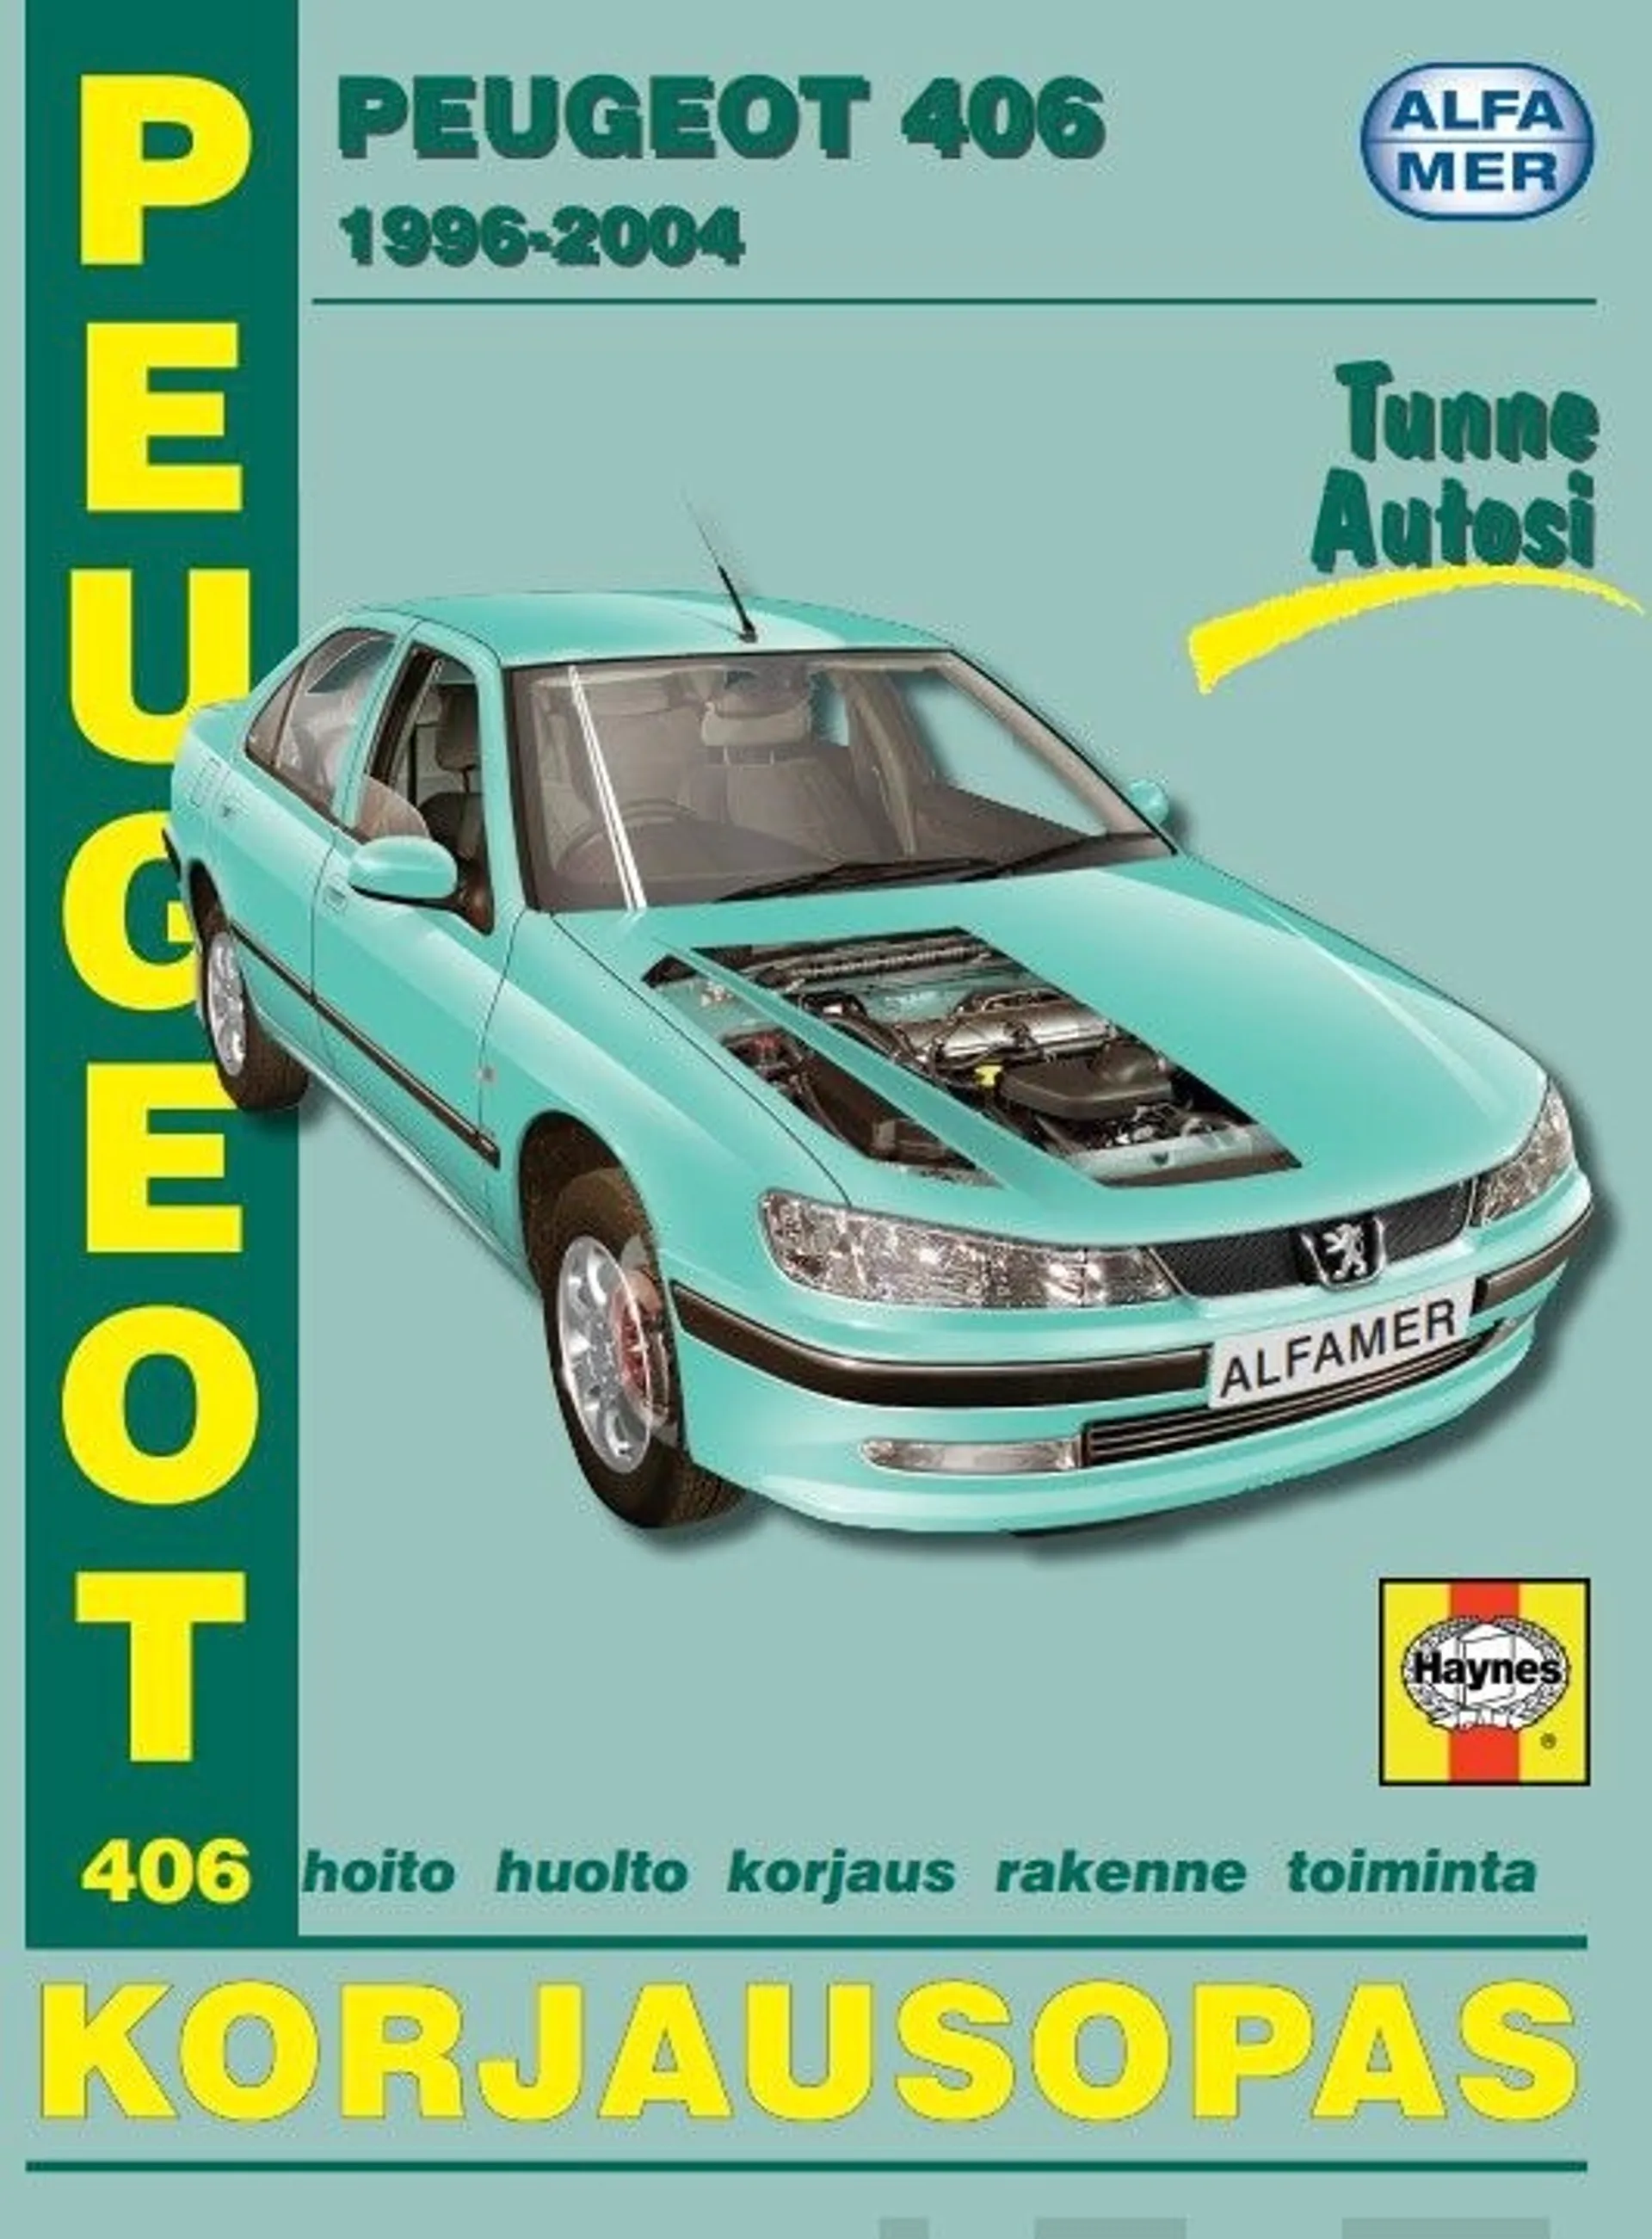 Mauno, Peugeot 406 1996-2004